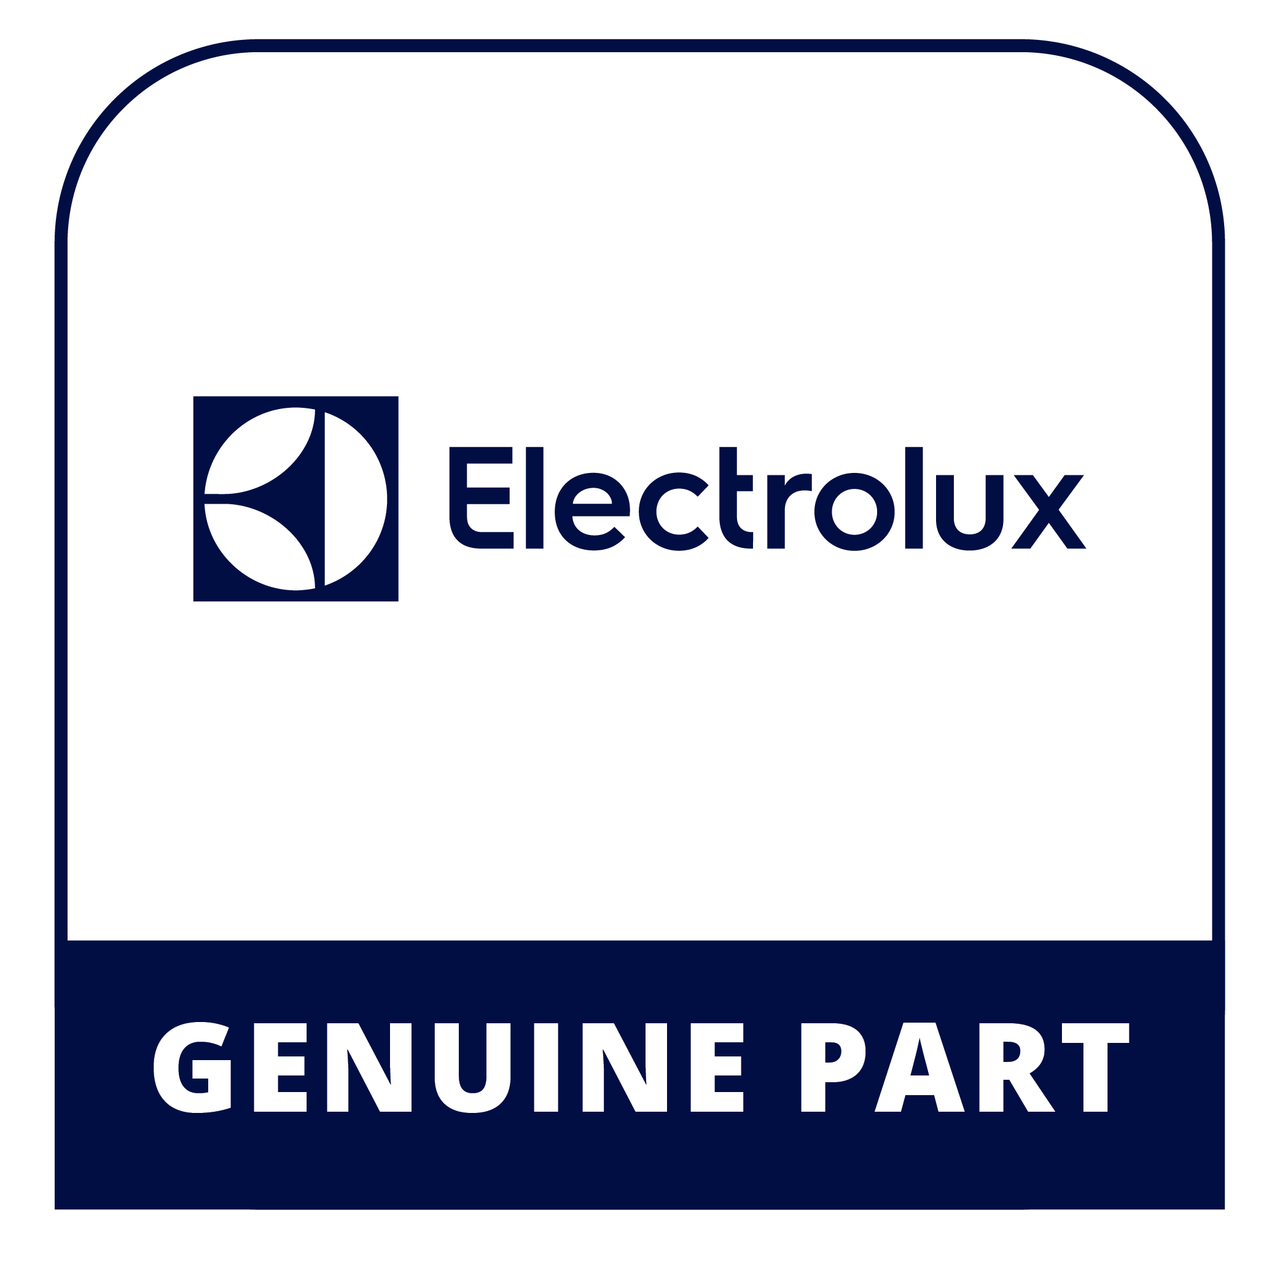 Frigidaire - Electrolux 5304492685 6 Epdm Washer Fill - Genuine Electrolux Part